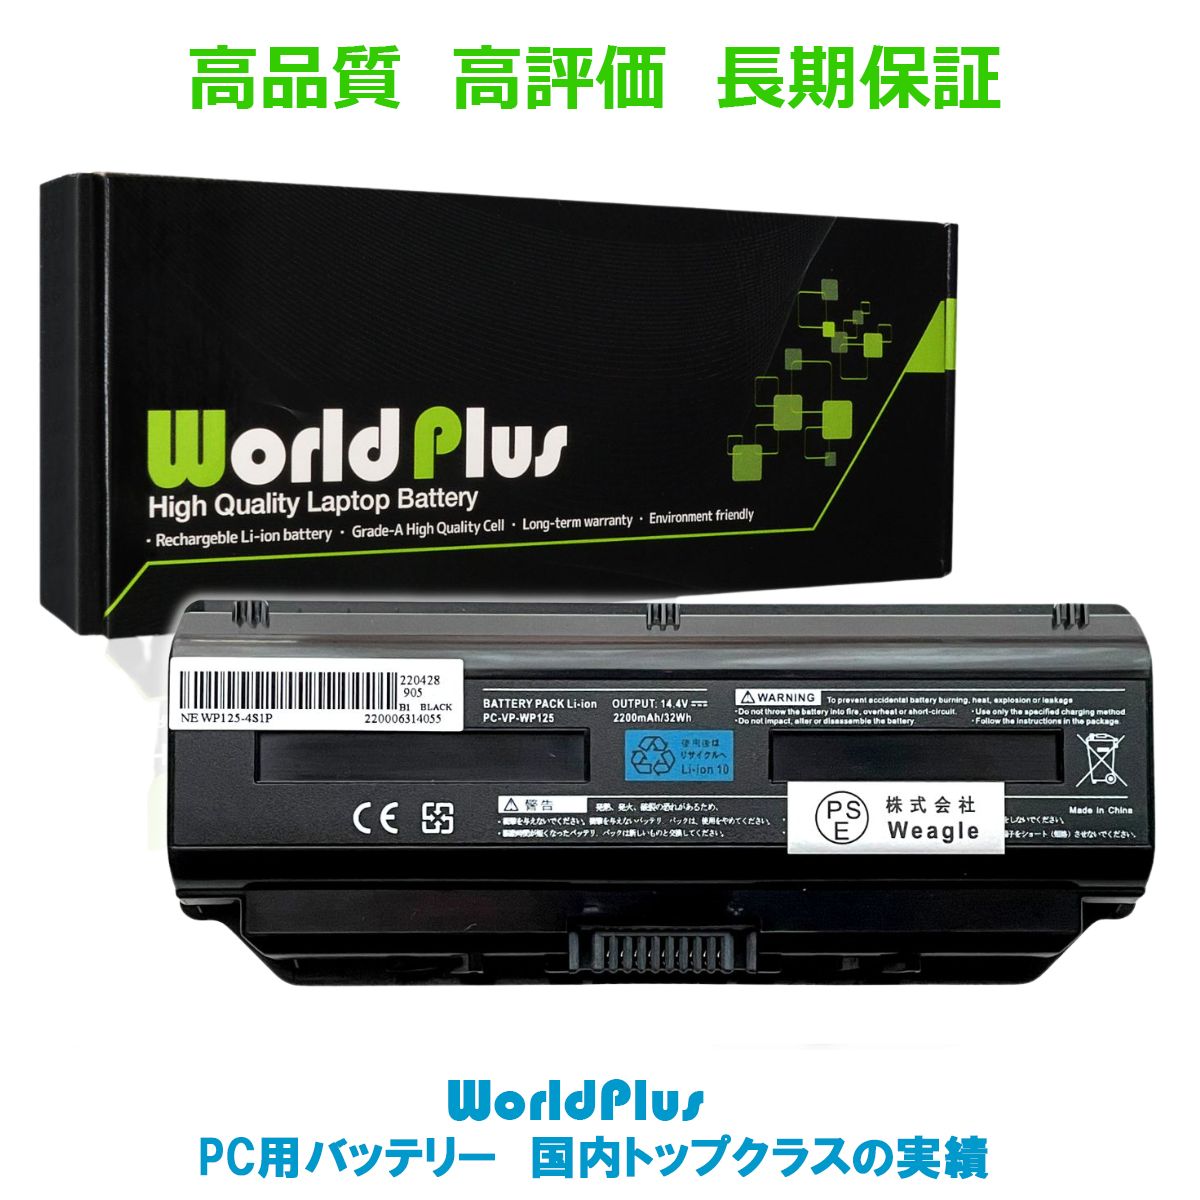 WorldPlus 互換バッテリー NEC PC-VP-WP125 交換用 NEC Lavie L / G / Note Standard / Direct NS 対応